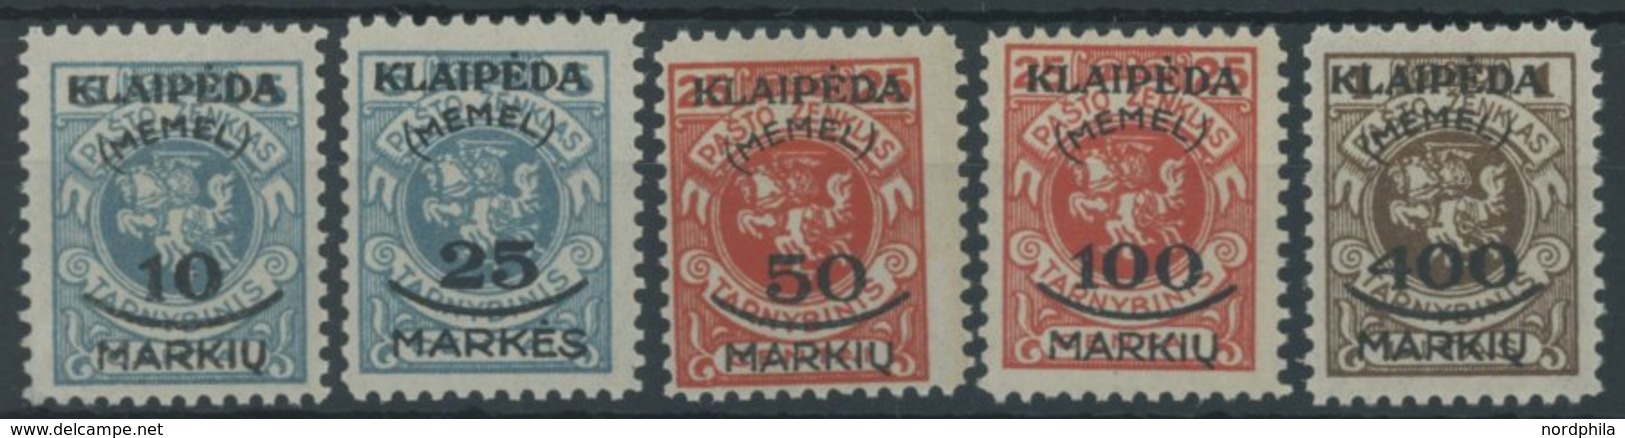 MEMELGEBIET 124-28 **, 1923, Staatsdruckerei Kowno, Postfrisch, Prachtsatz, Mi. 120.- - Memel (Klaipeda) 1923